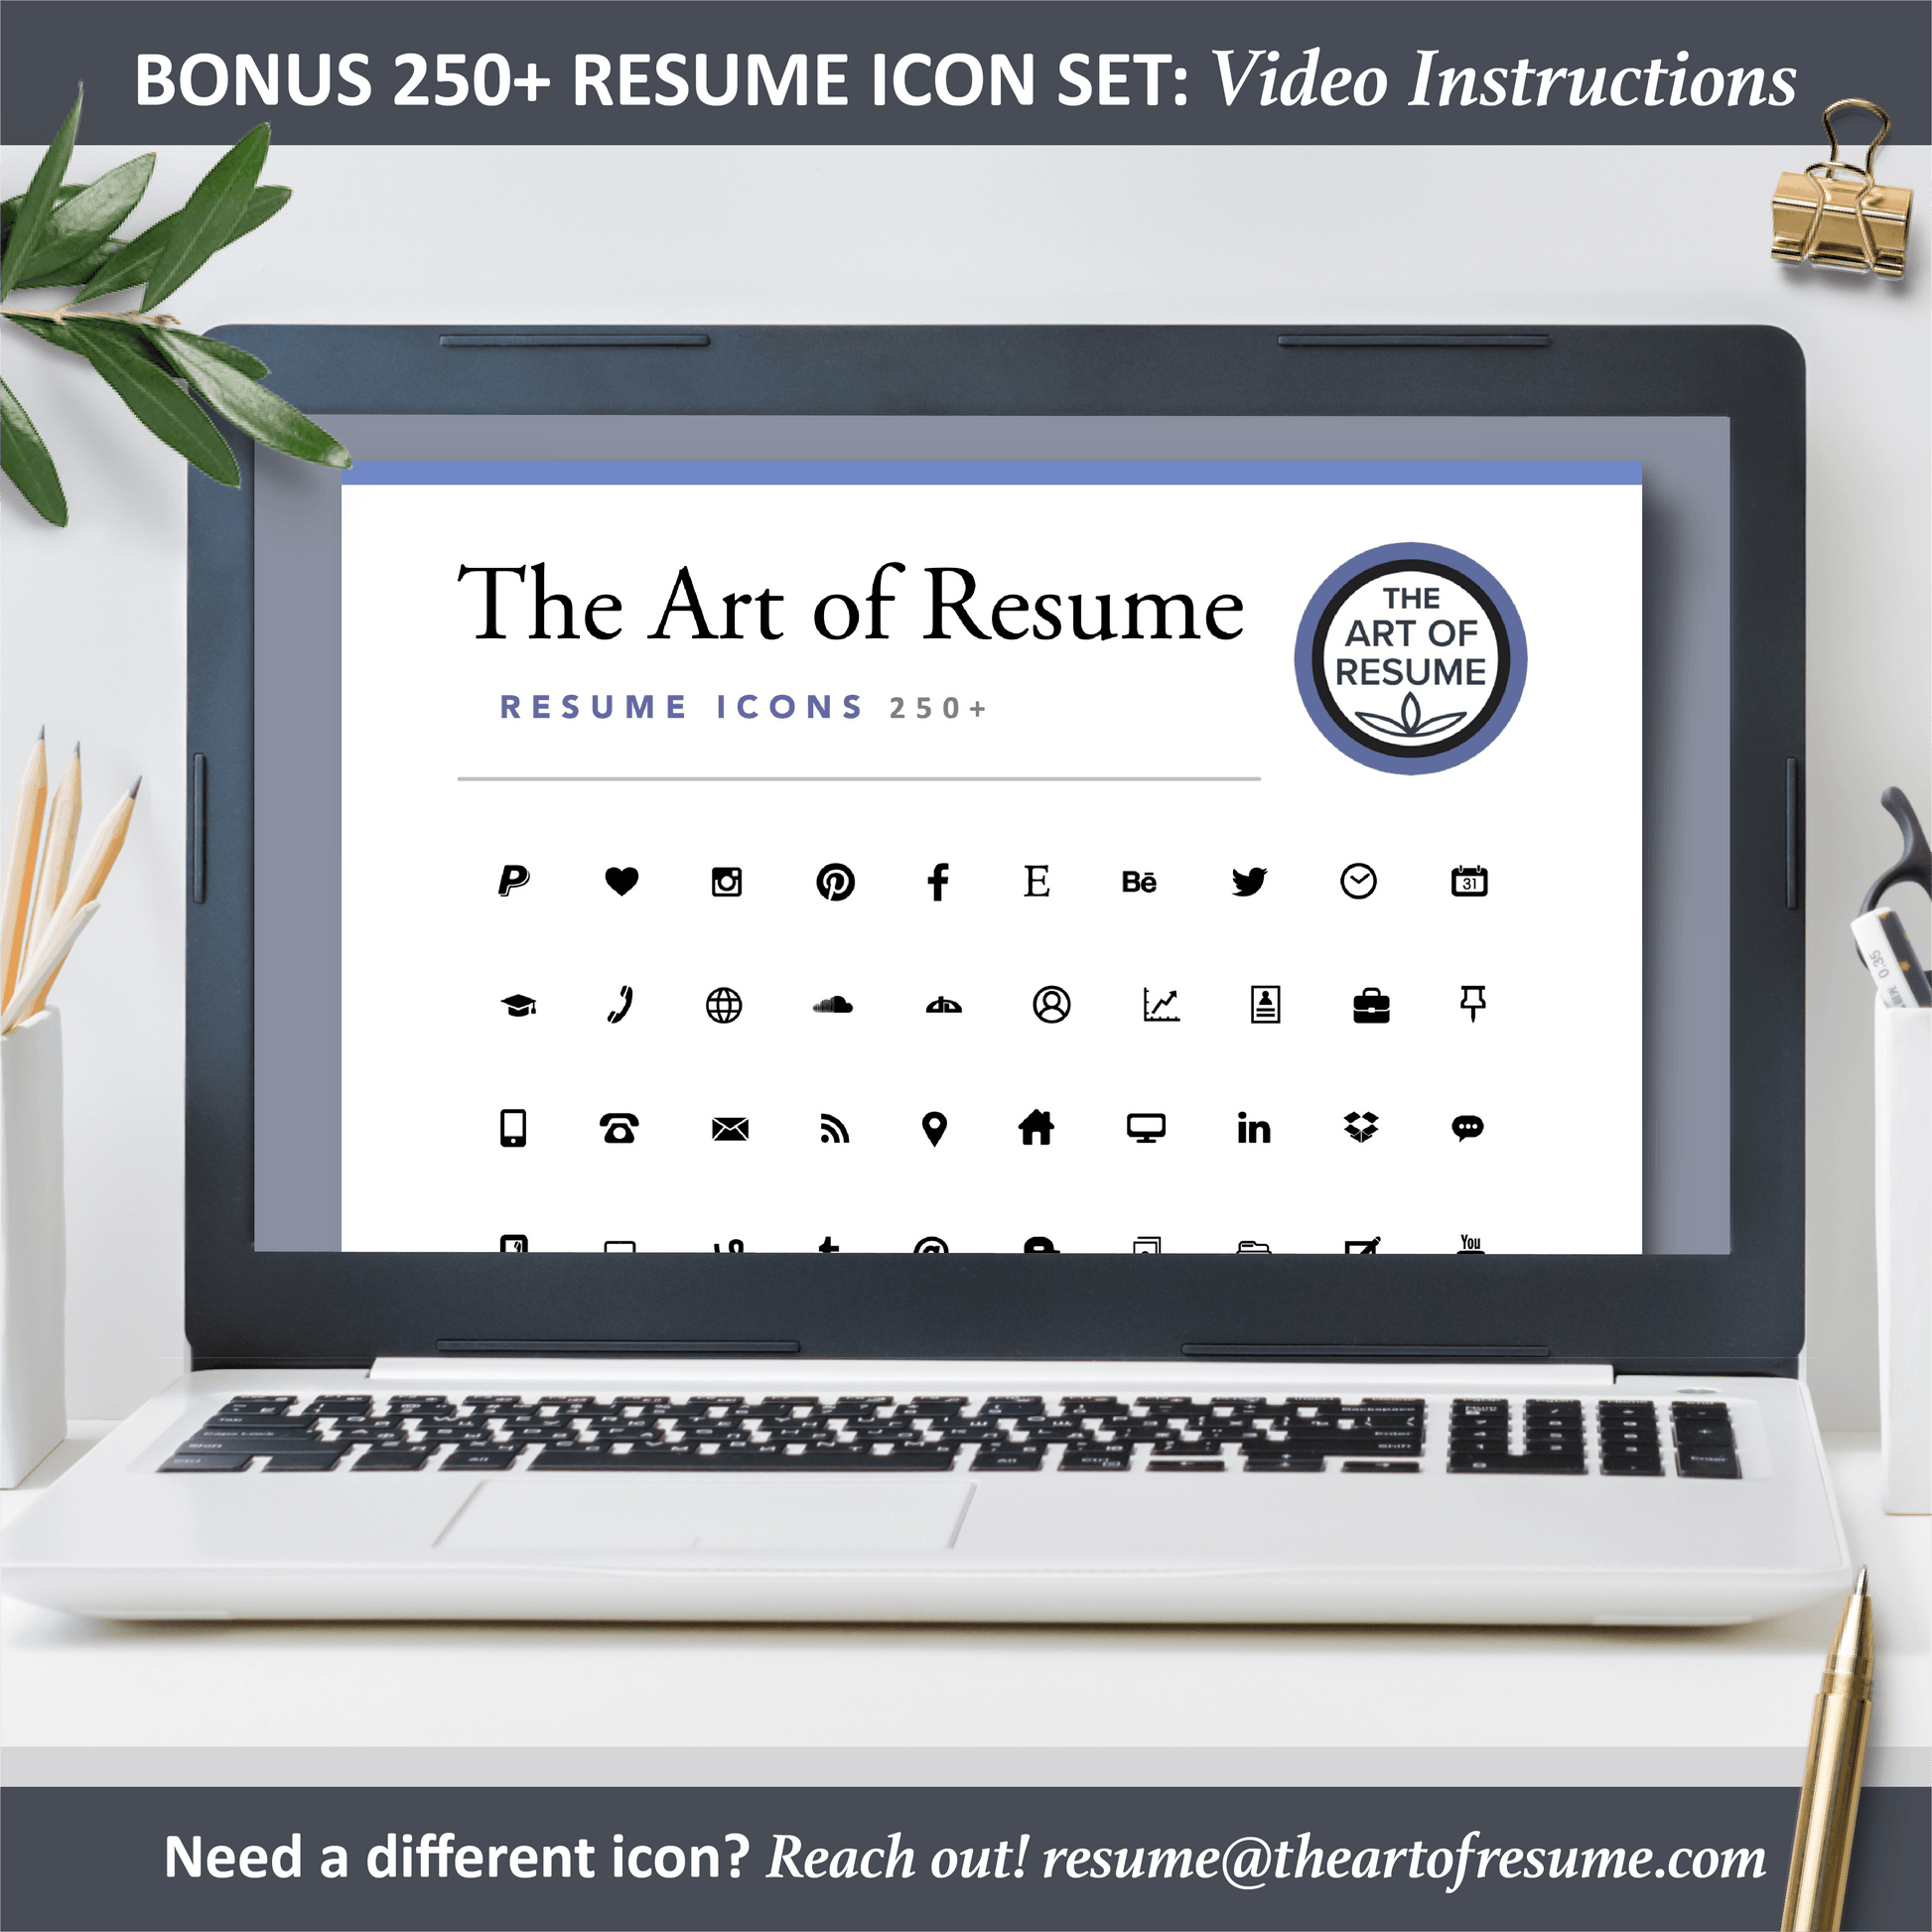 Resume CV Builder Template Bundle | Free Resume Writing Guide - The Art of Resume